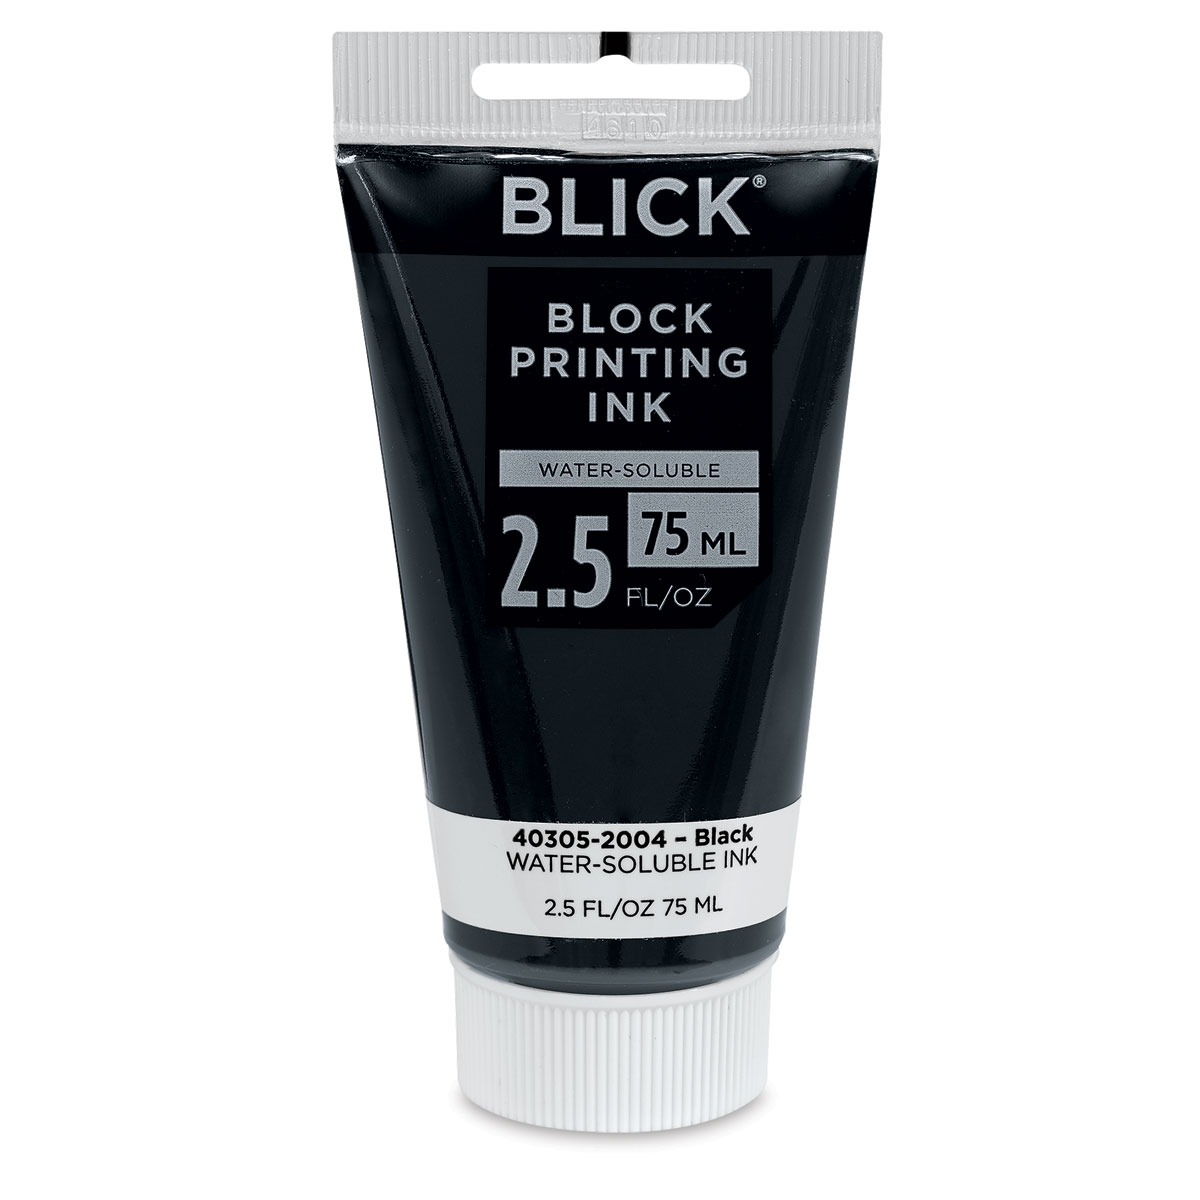 Blick Water-Soluble Block Printing Ink - Black, 2.5 oz Tube